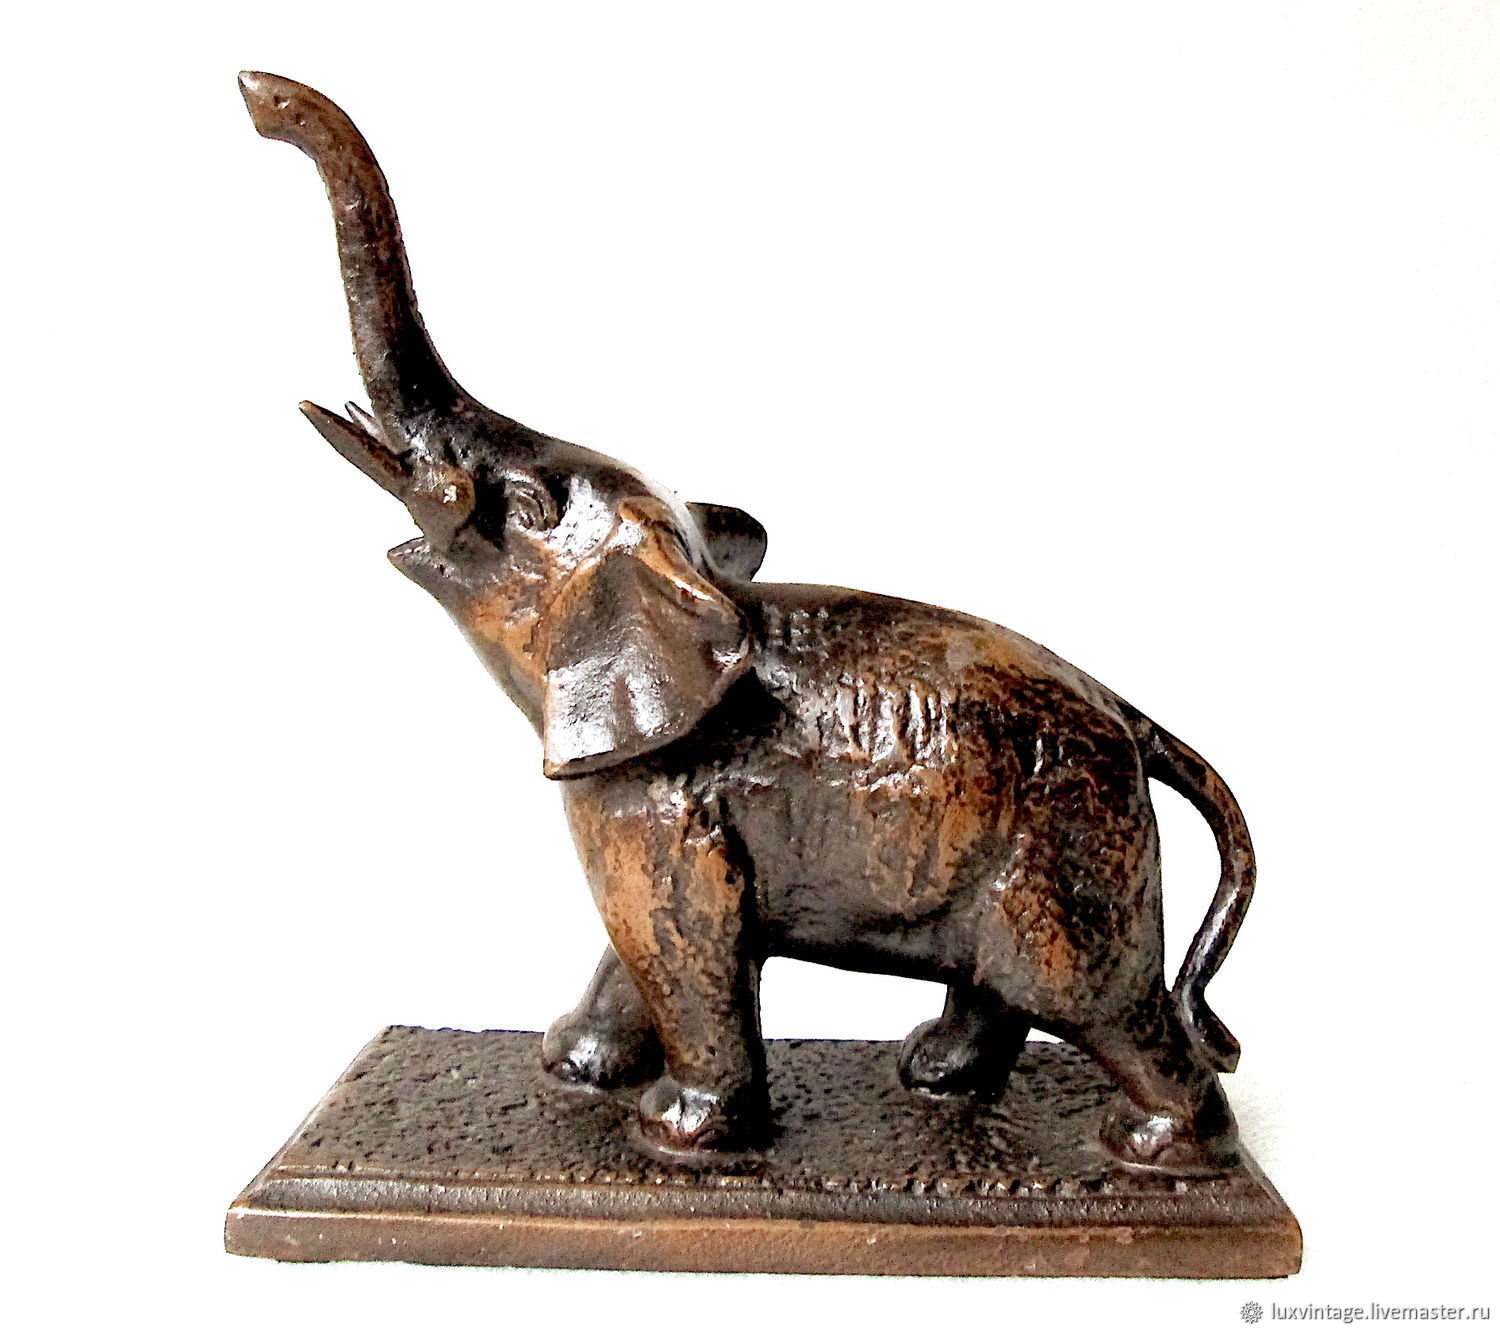 Cast Iron Fireplace tools Lovely Collectible Figurine Elephant Vintage Style as Kasli Cast Iron – ÐºÑÐ¿Ð¸ÑÑ Ð½Ð° Ð¯ÑÐ¼Ð°ÑÐºÐµ ÐÐ°ÑÑÐµÑÐ¾Ð² – E98l1